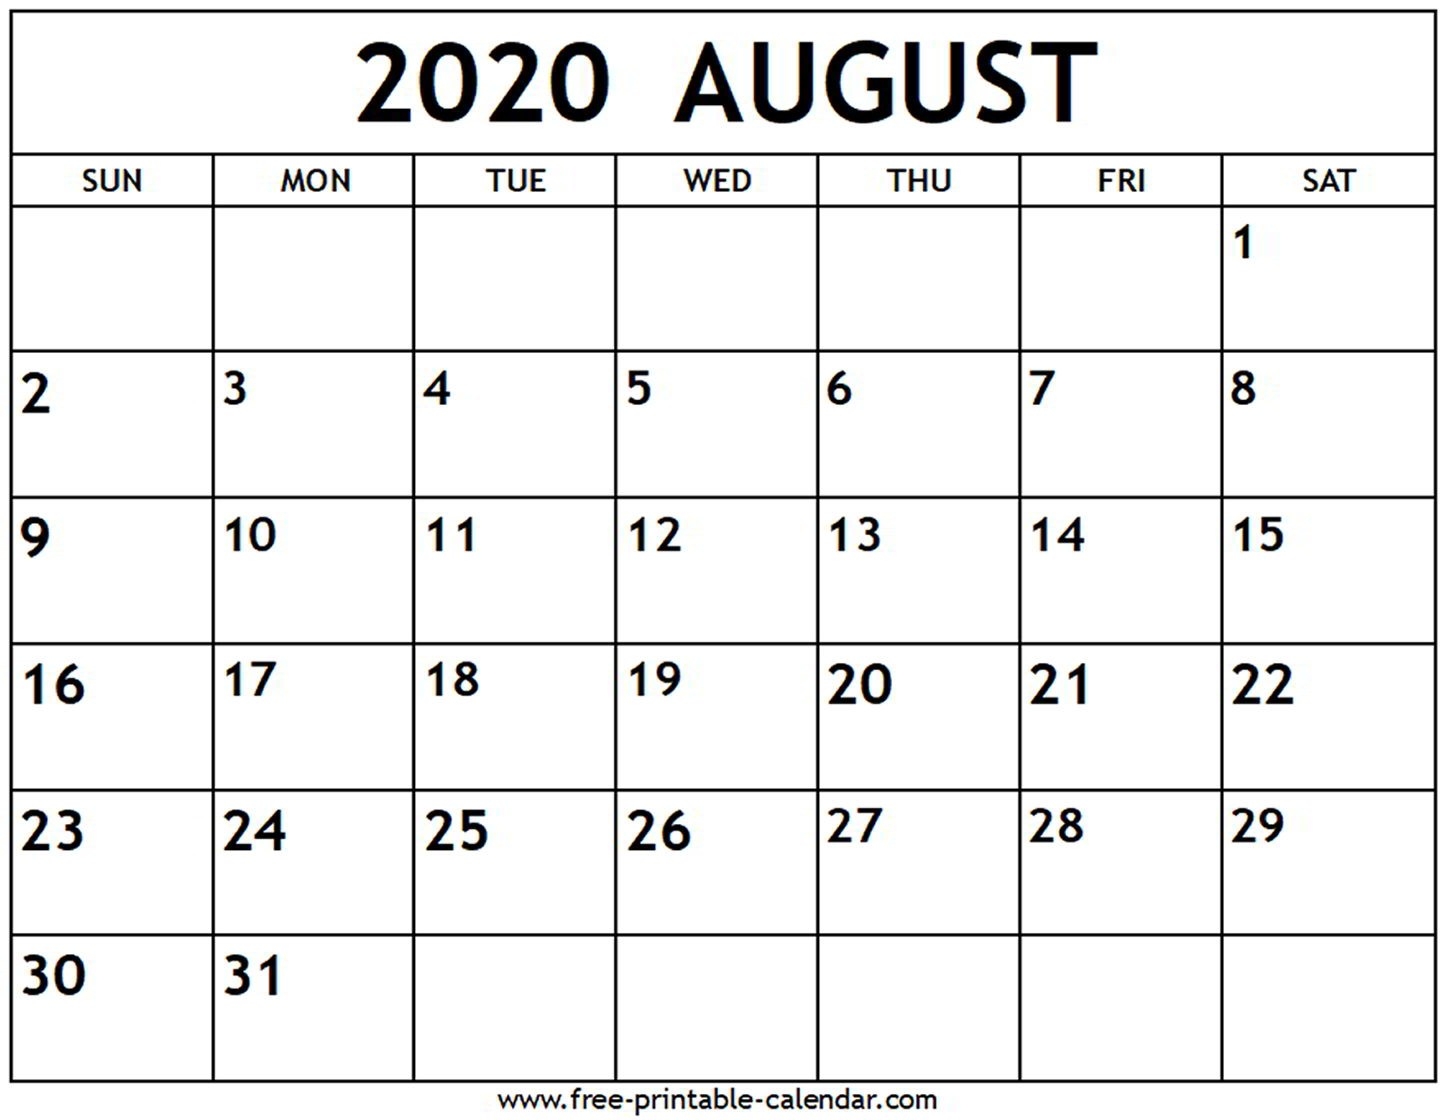 August 2020 Calendar - Free-Printable-Calendar-Blank Calendar For June July And August 2020